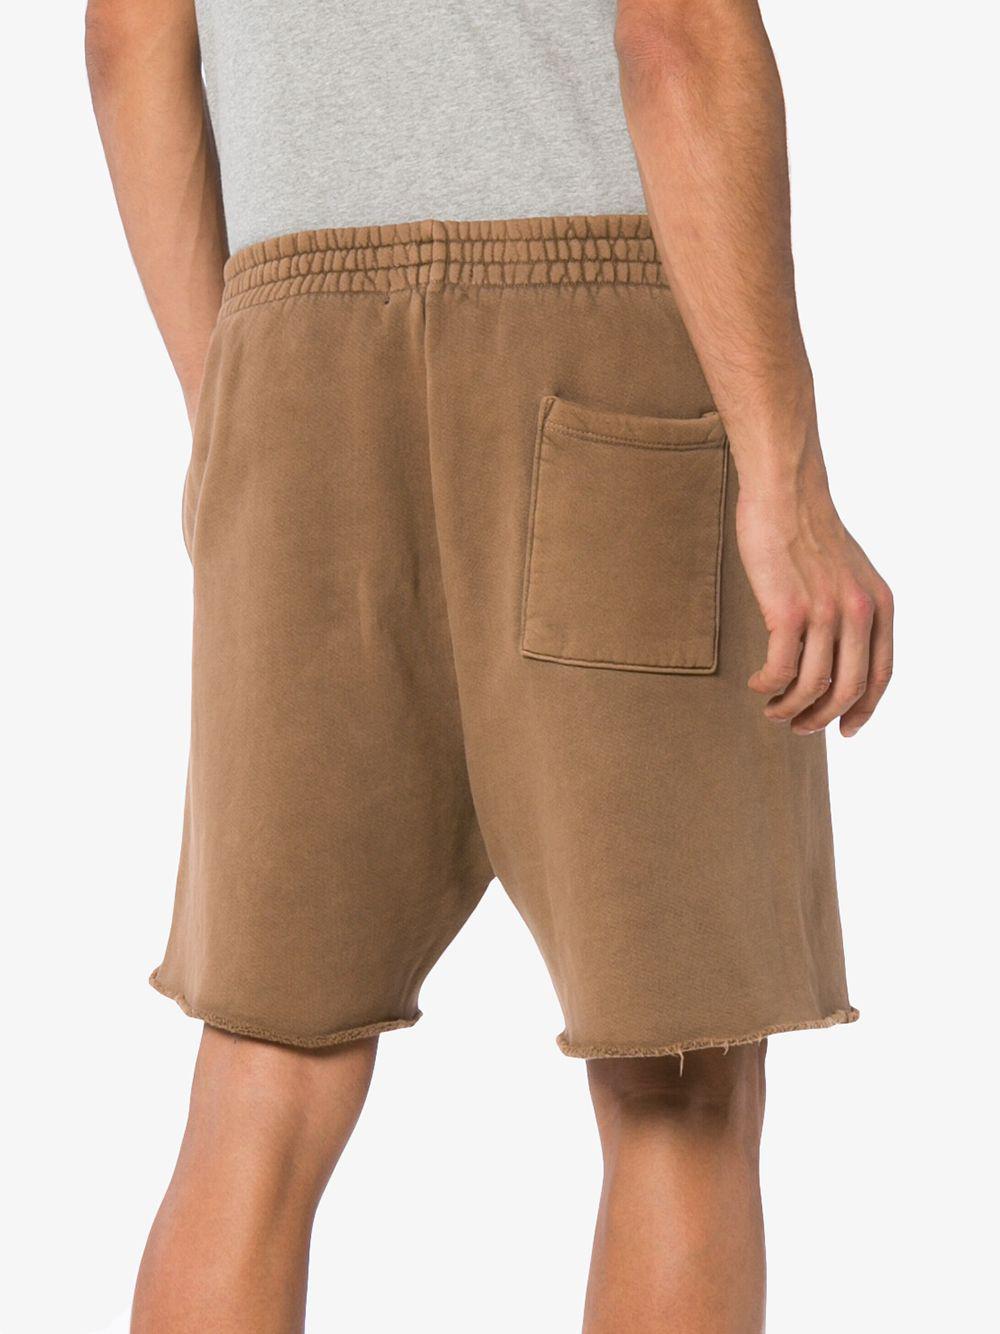 sweat shorts with yeezys